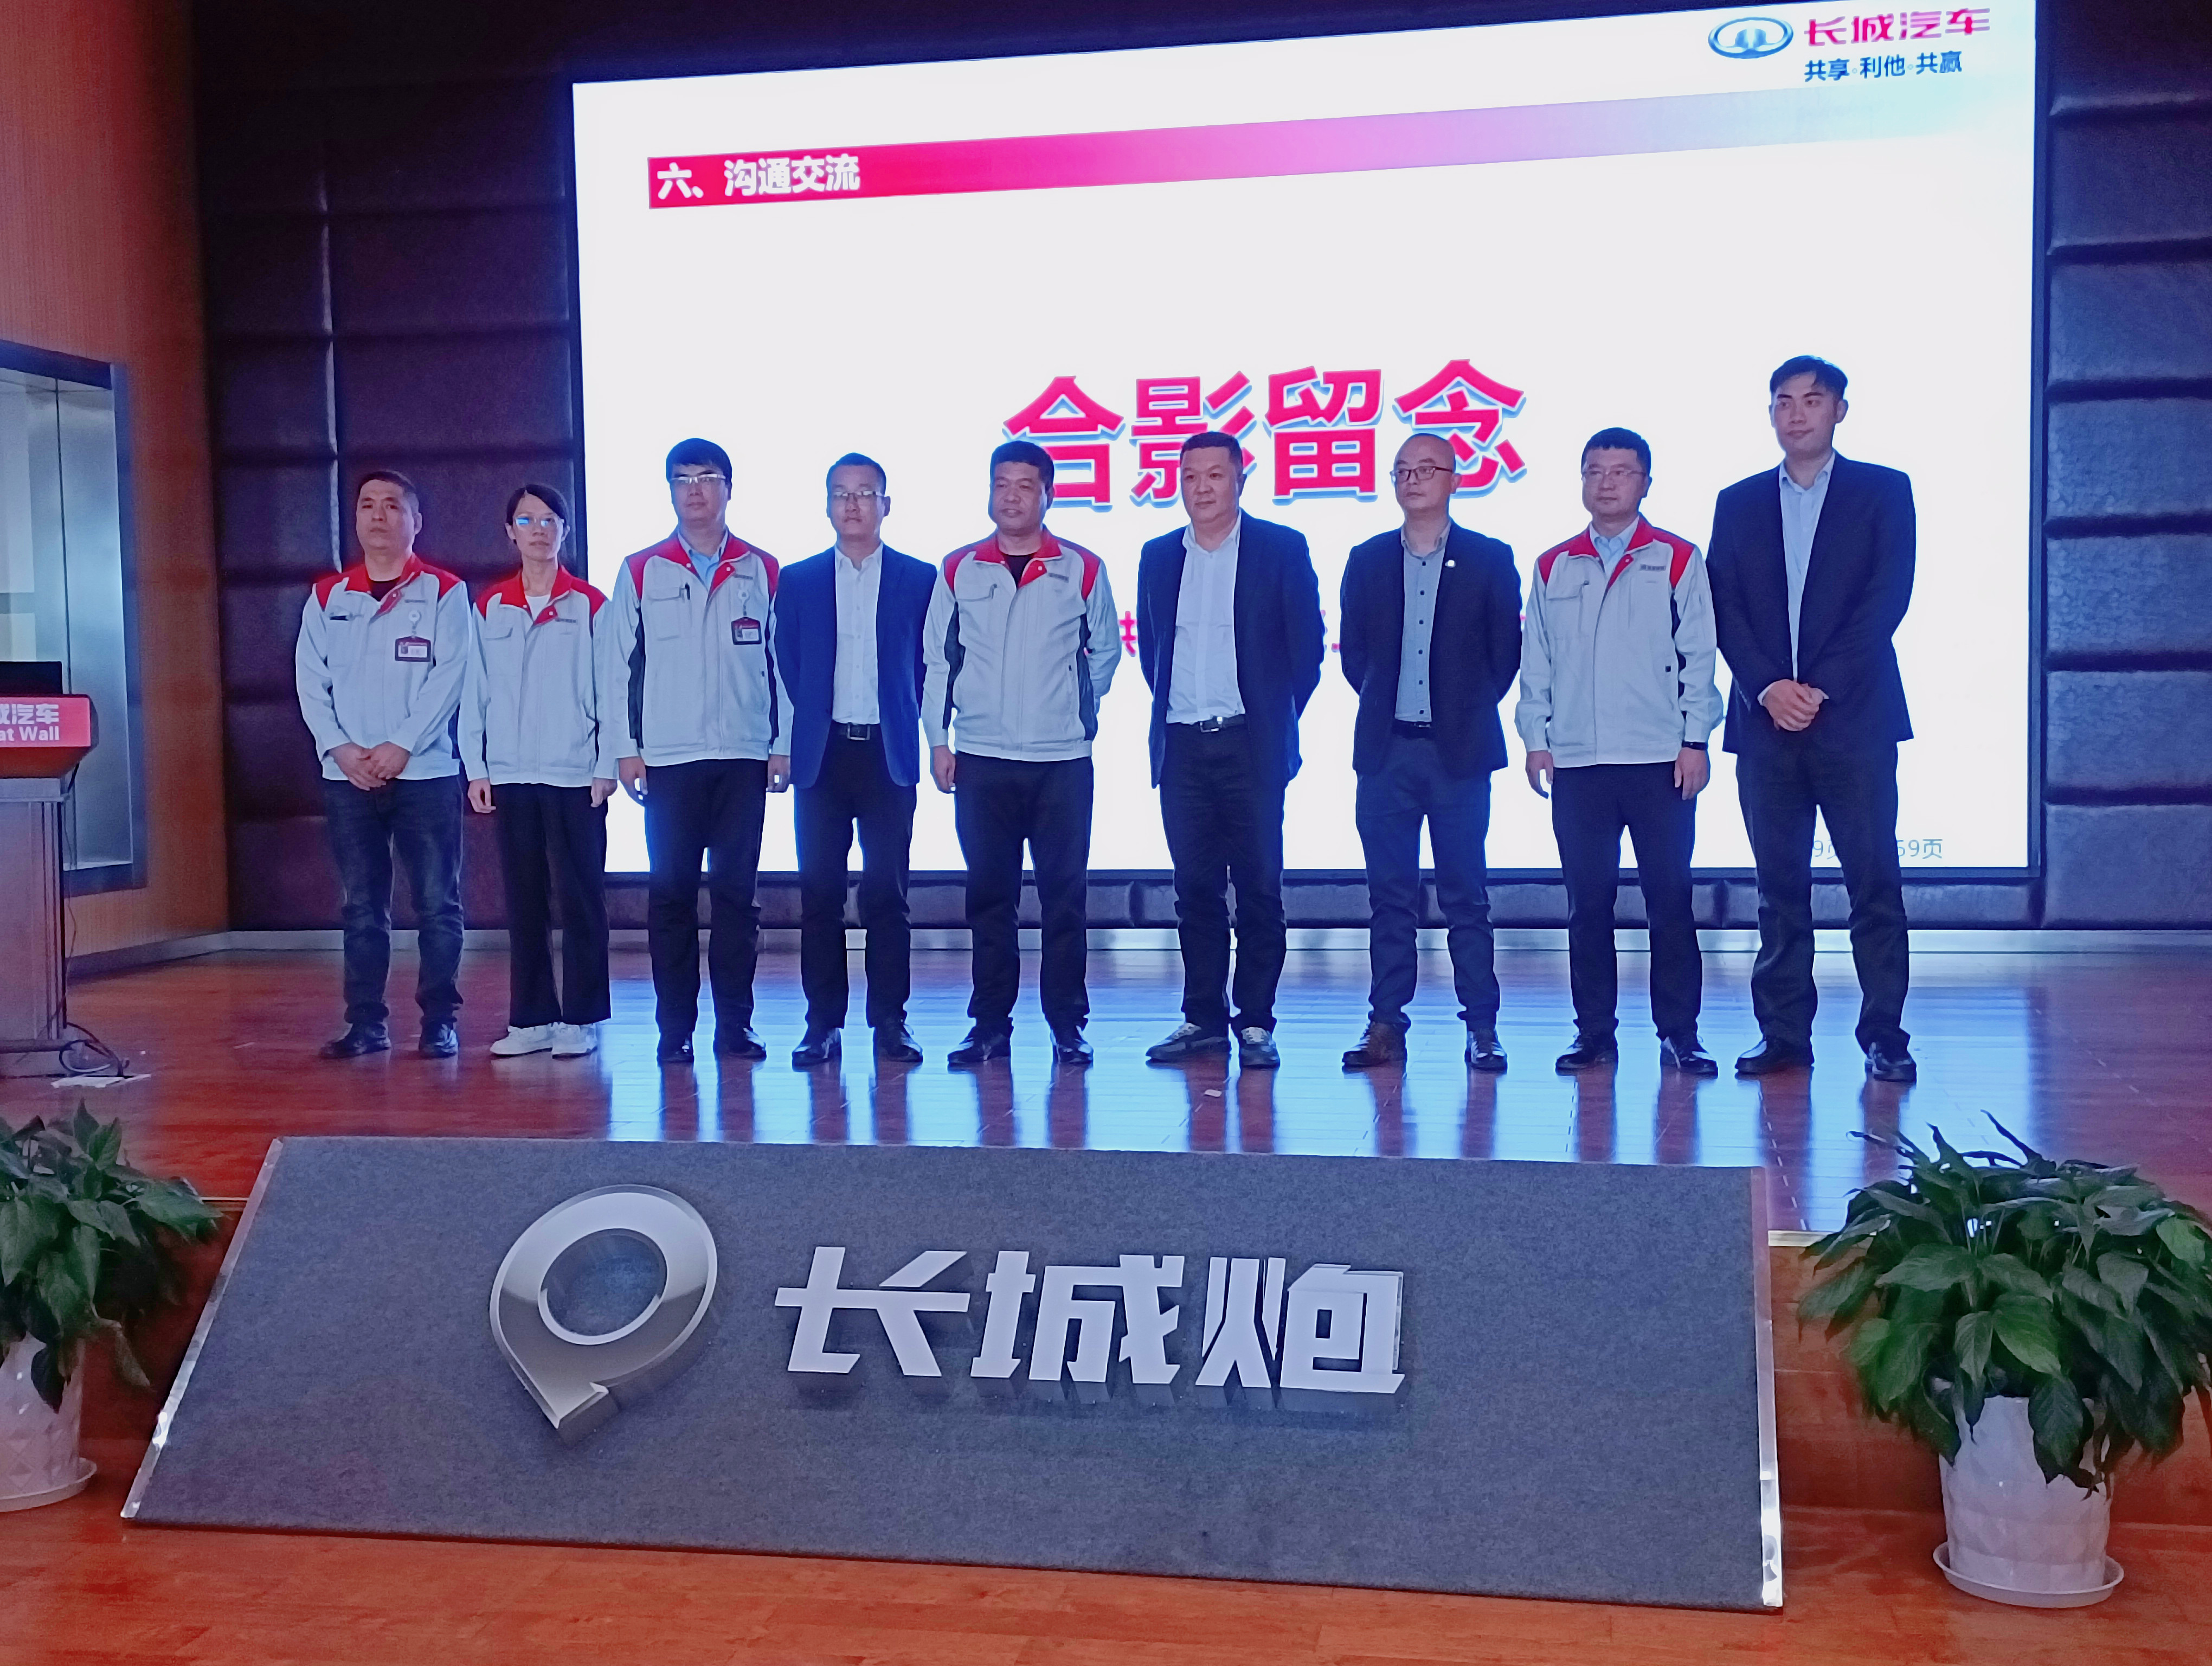 Good news! Liuzhou Shuangfei Company won the Great Wall Motors Quality Progress Award